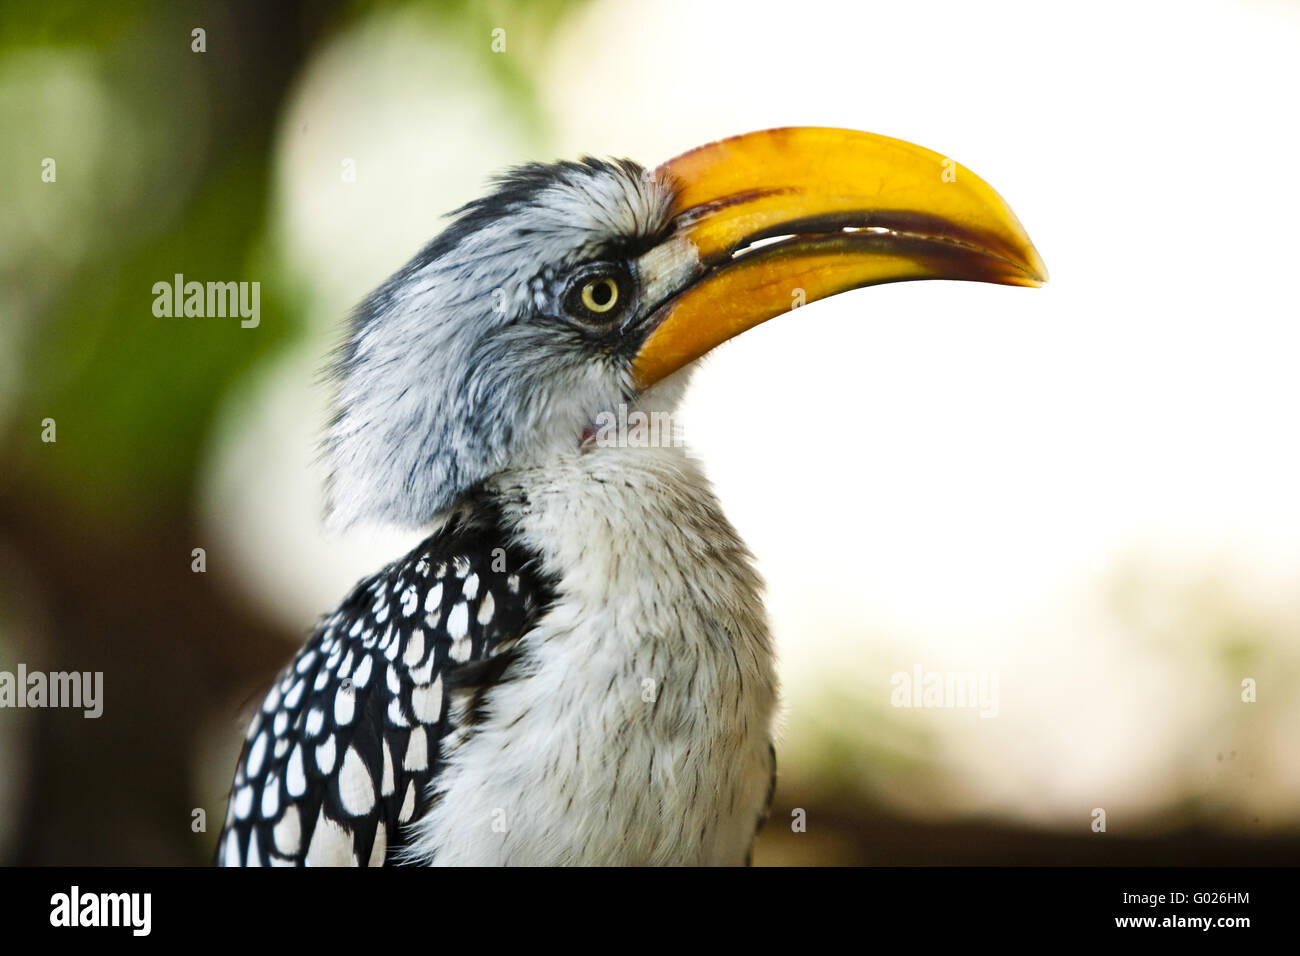 Southern Yellow-billed Hornbill (Tockus flavirostris) Stock Photo